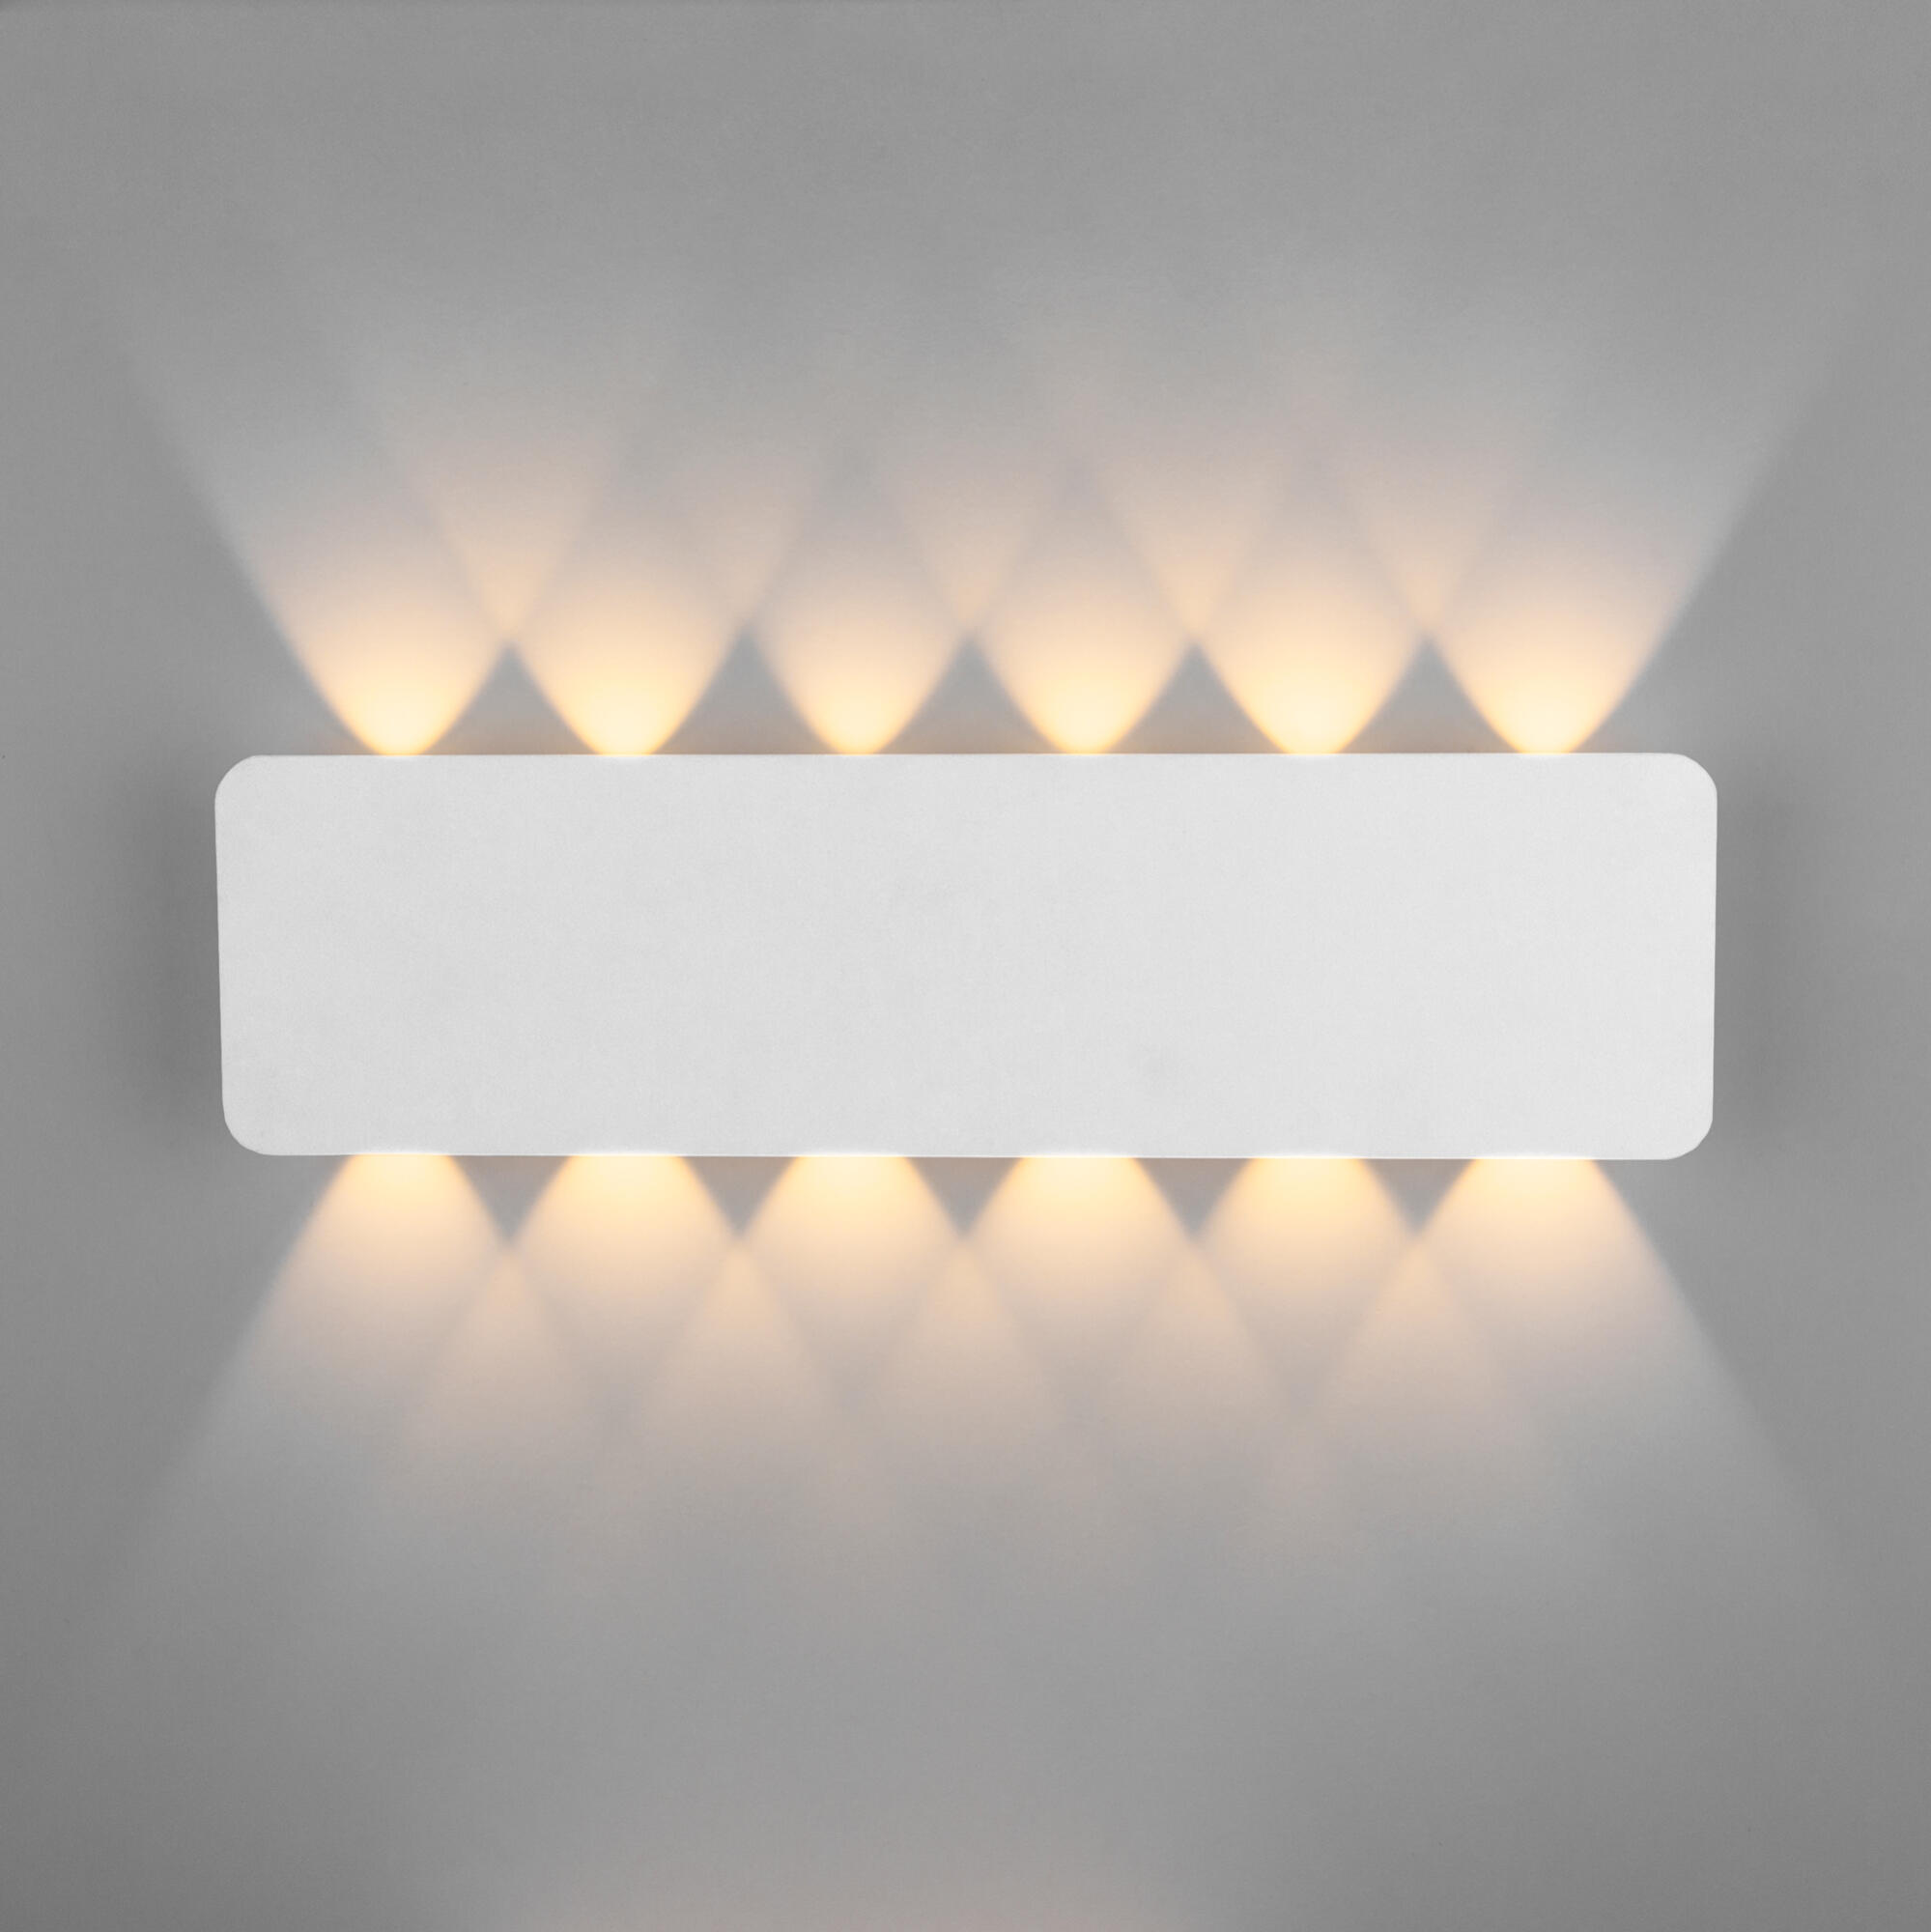 Настенный светодиодный светильник Angle LED 40139/1 LED 40139/1 LED